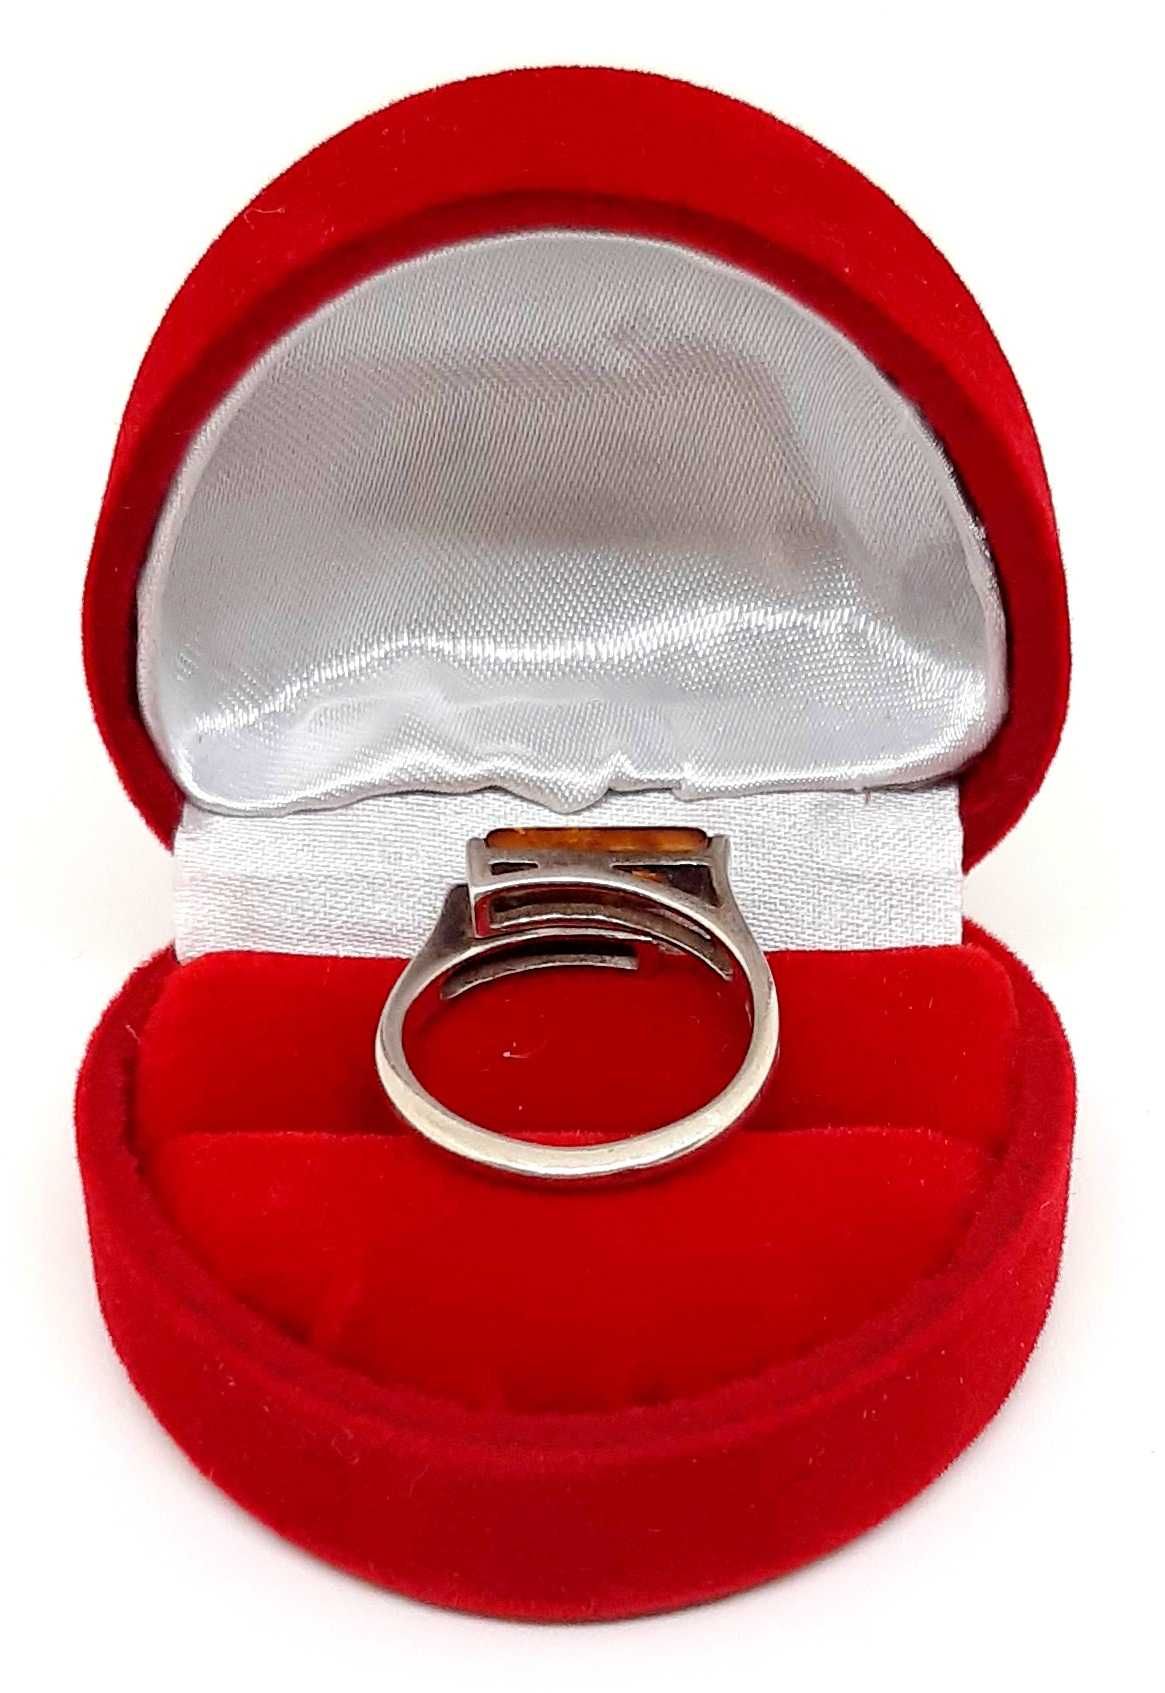 Srebrny pierścionek Bursztyn Cyrkonie PR.925 W:3,04gr R.12 InterSKLEP